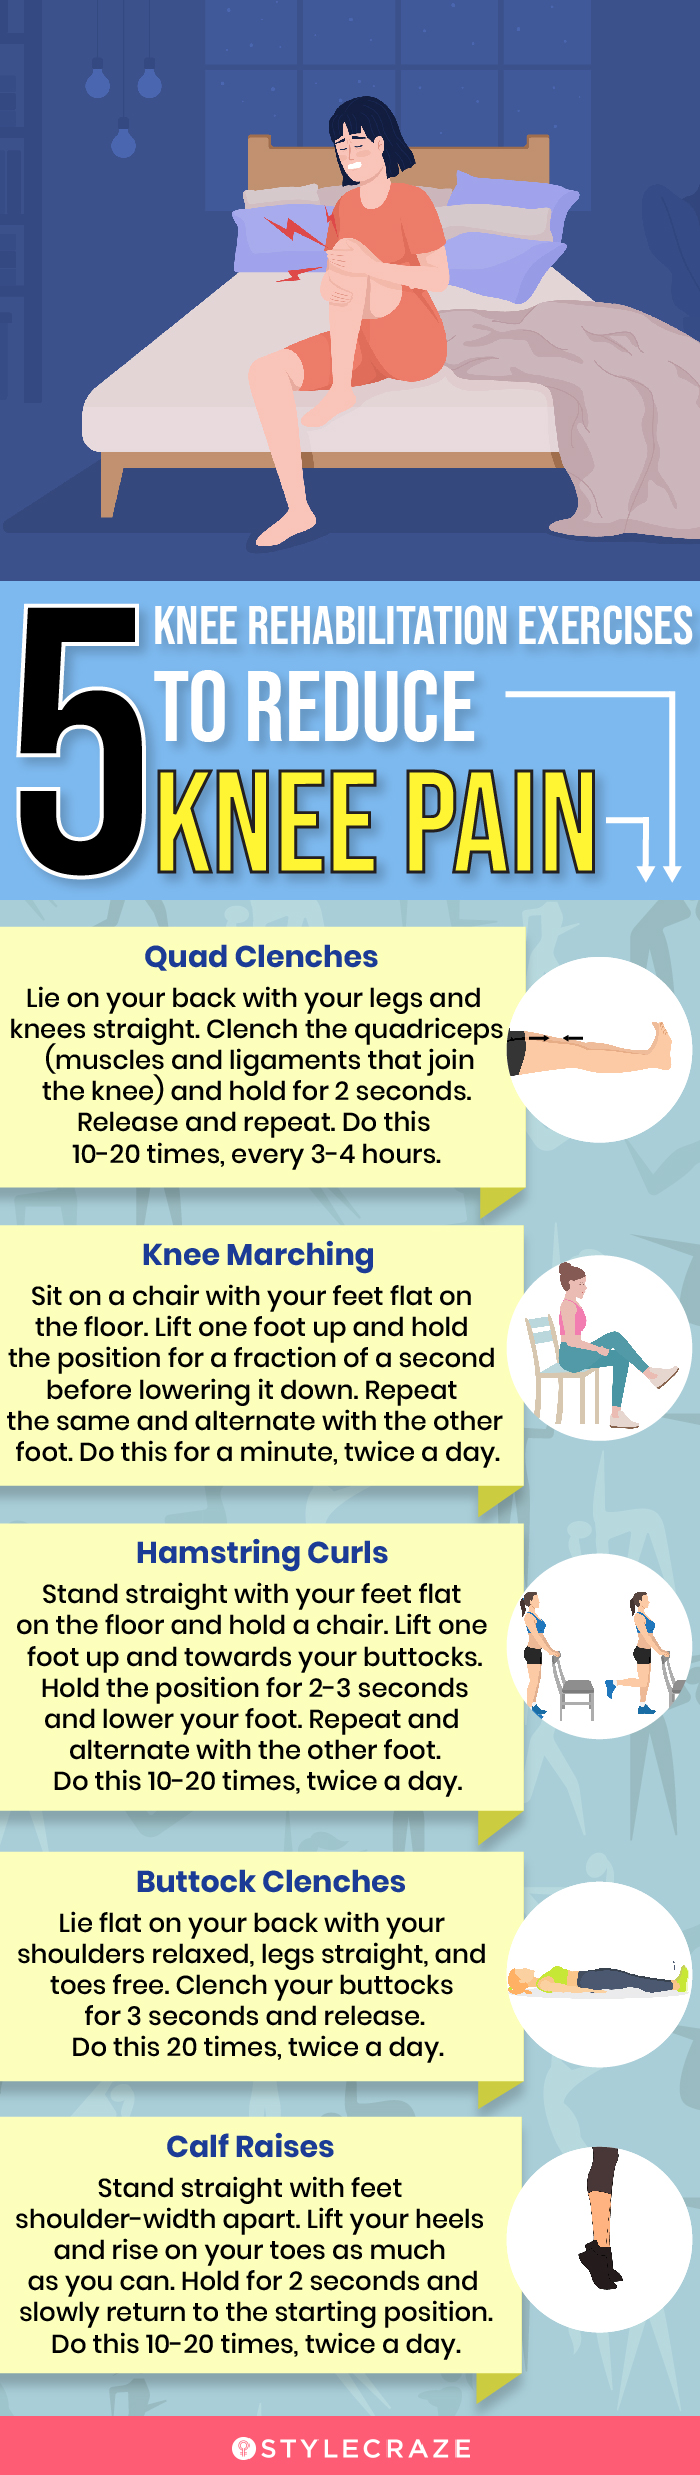 5 knee rehabilitation exercises to reduce knee pain (infographic)